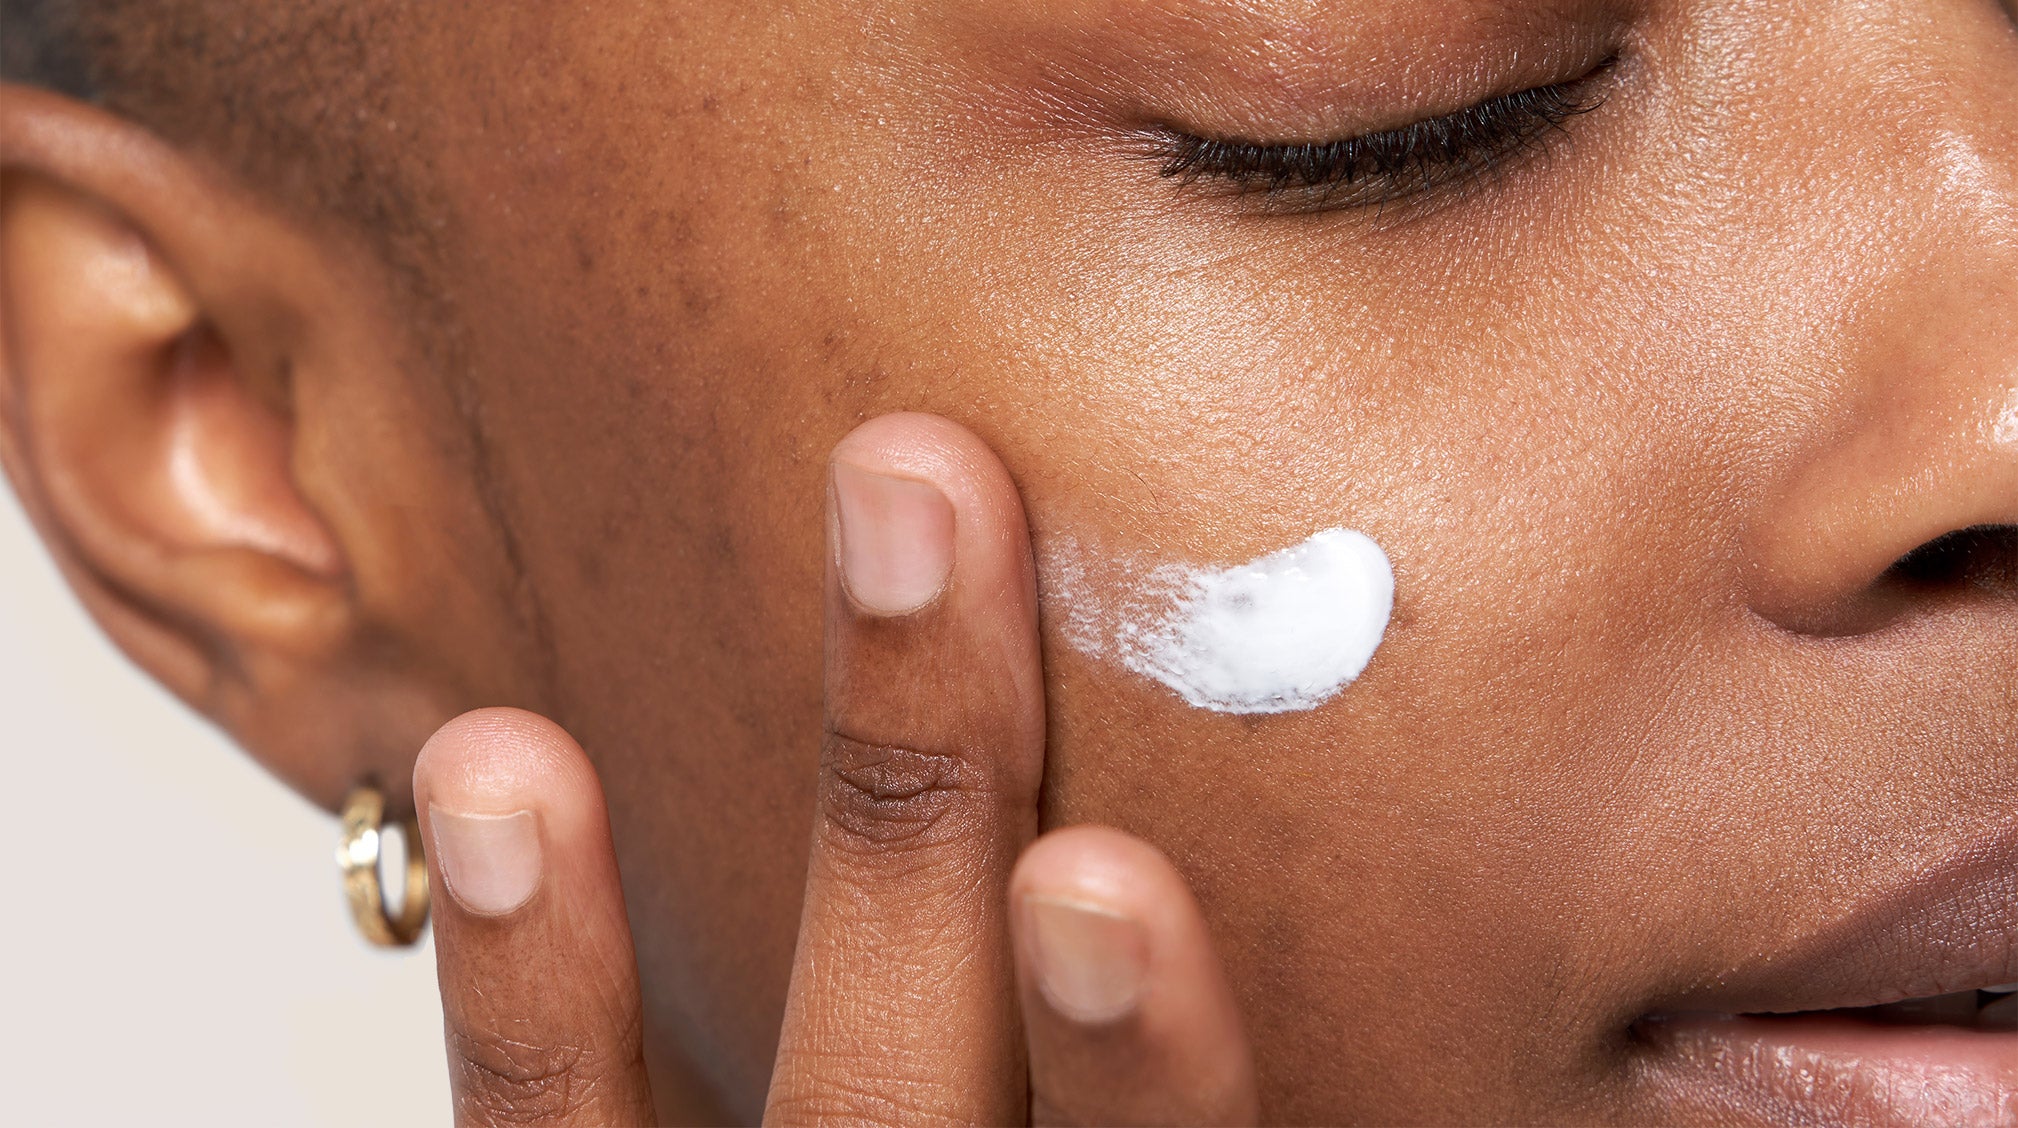 Viral 'whipped cream' sunscreen back in stock - Good Morning America